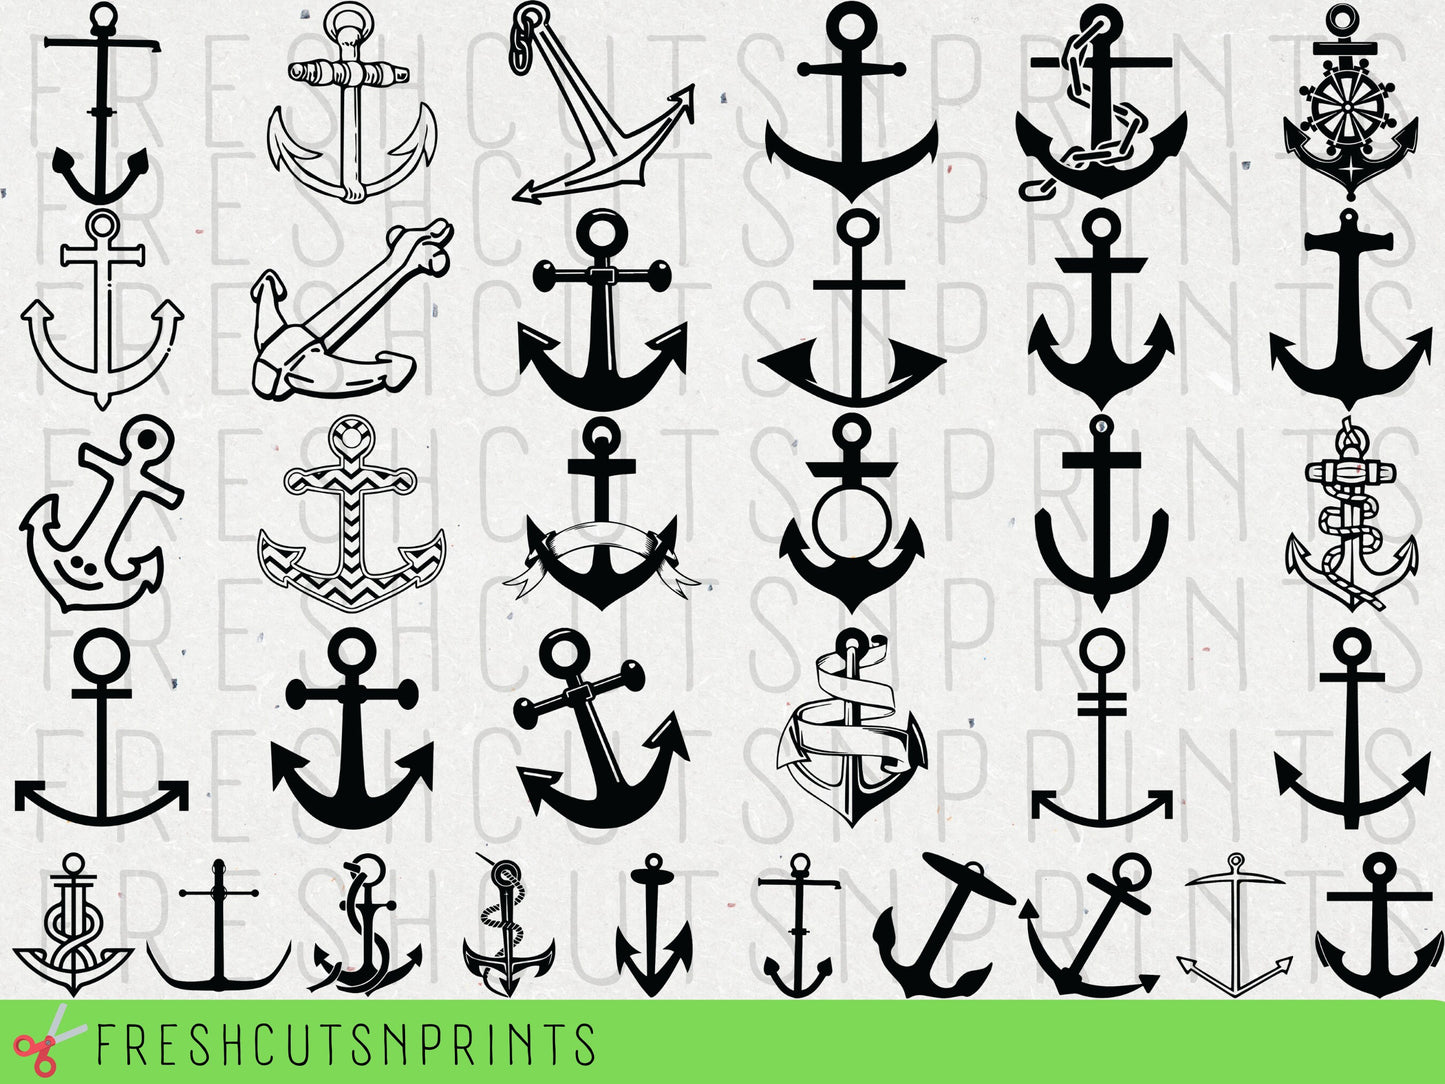 34 Anchor SVG Bundle , Anchor Clipart, Anchor Cut File, Anchor Silhouette, Anchor Decal, Anchor Vector, Naval svg, Anchor DXF, Naval clipart